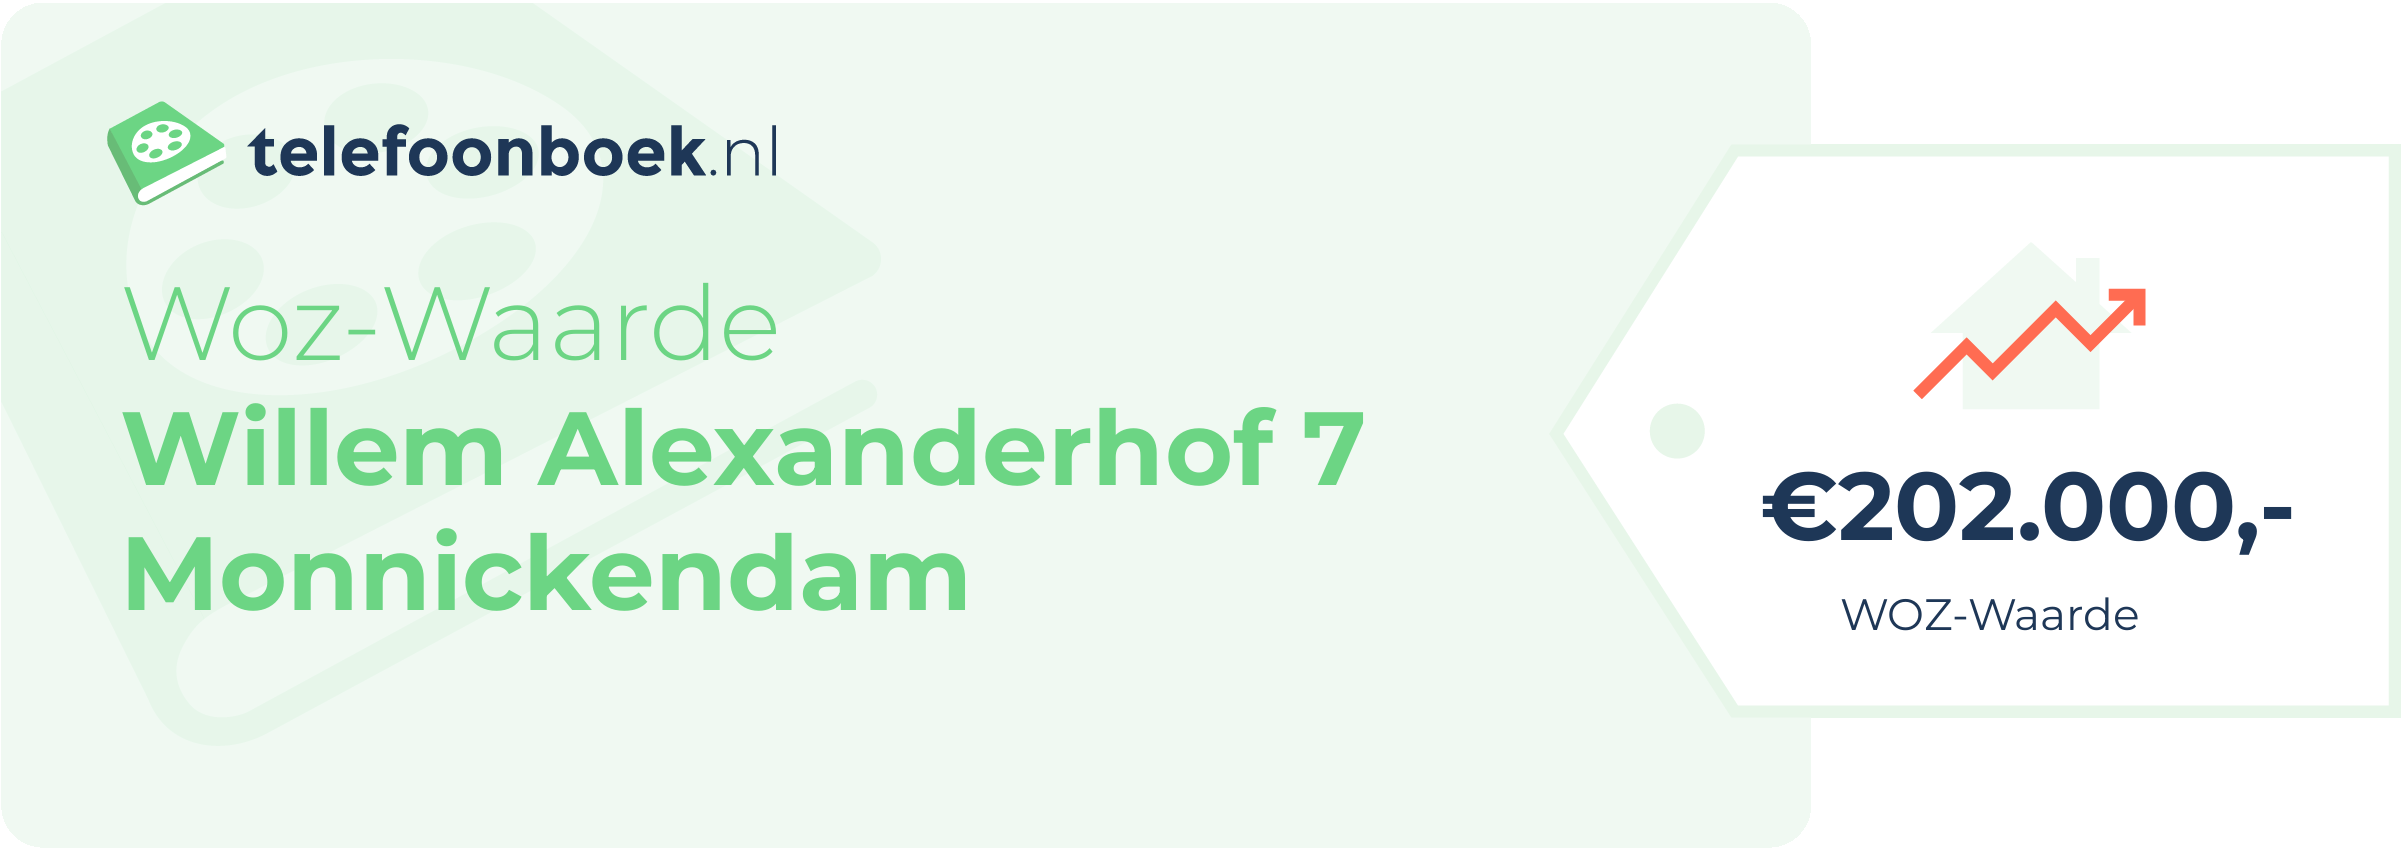 WOZ-waarde Willem Alexanderhof 7 Monnickendam